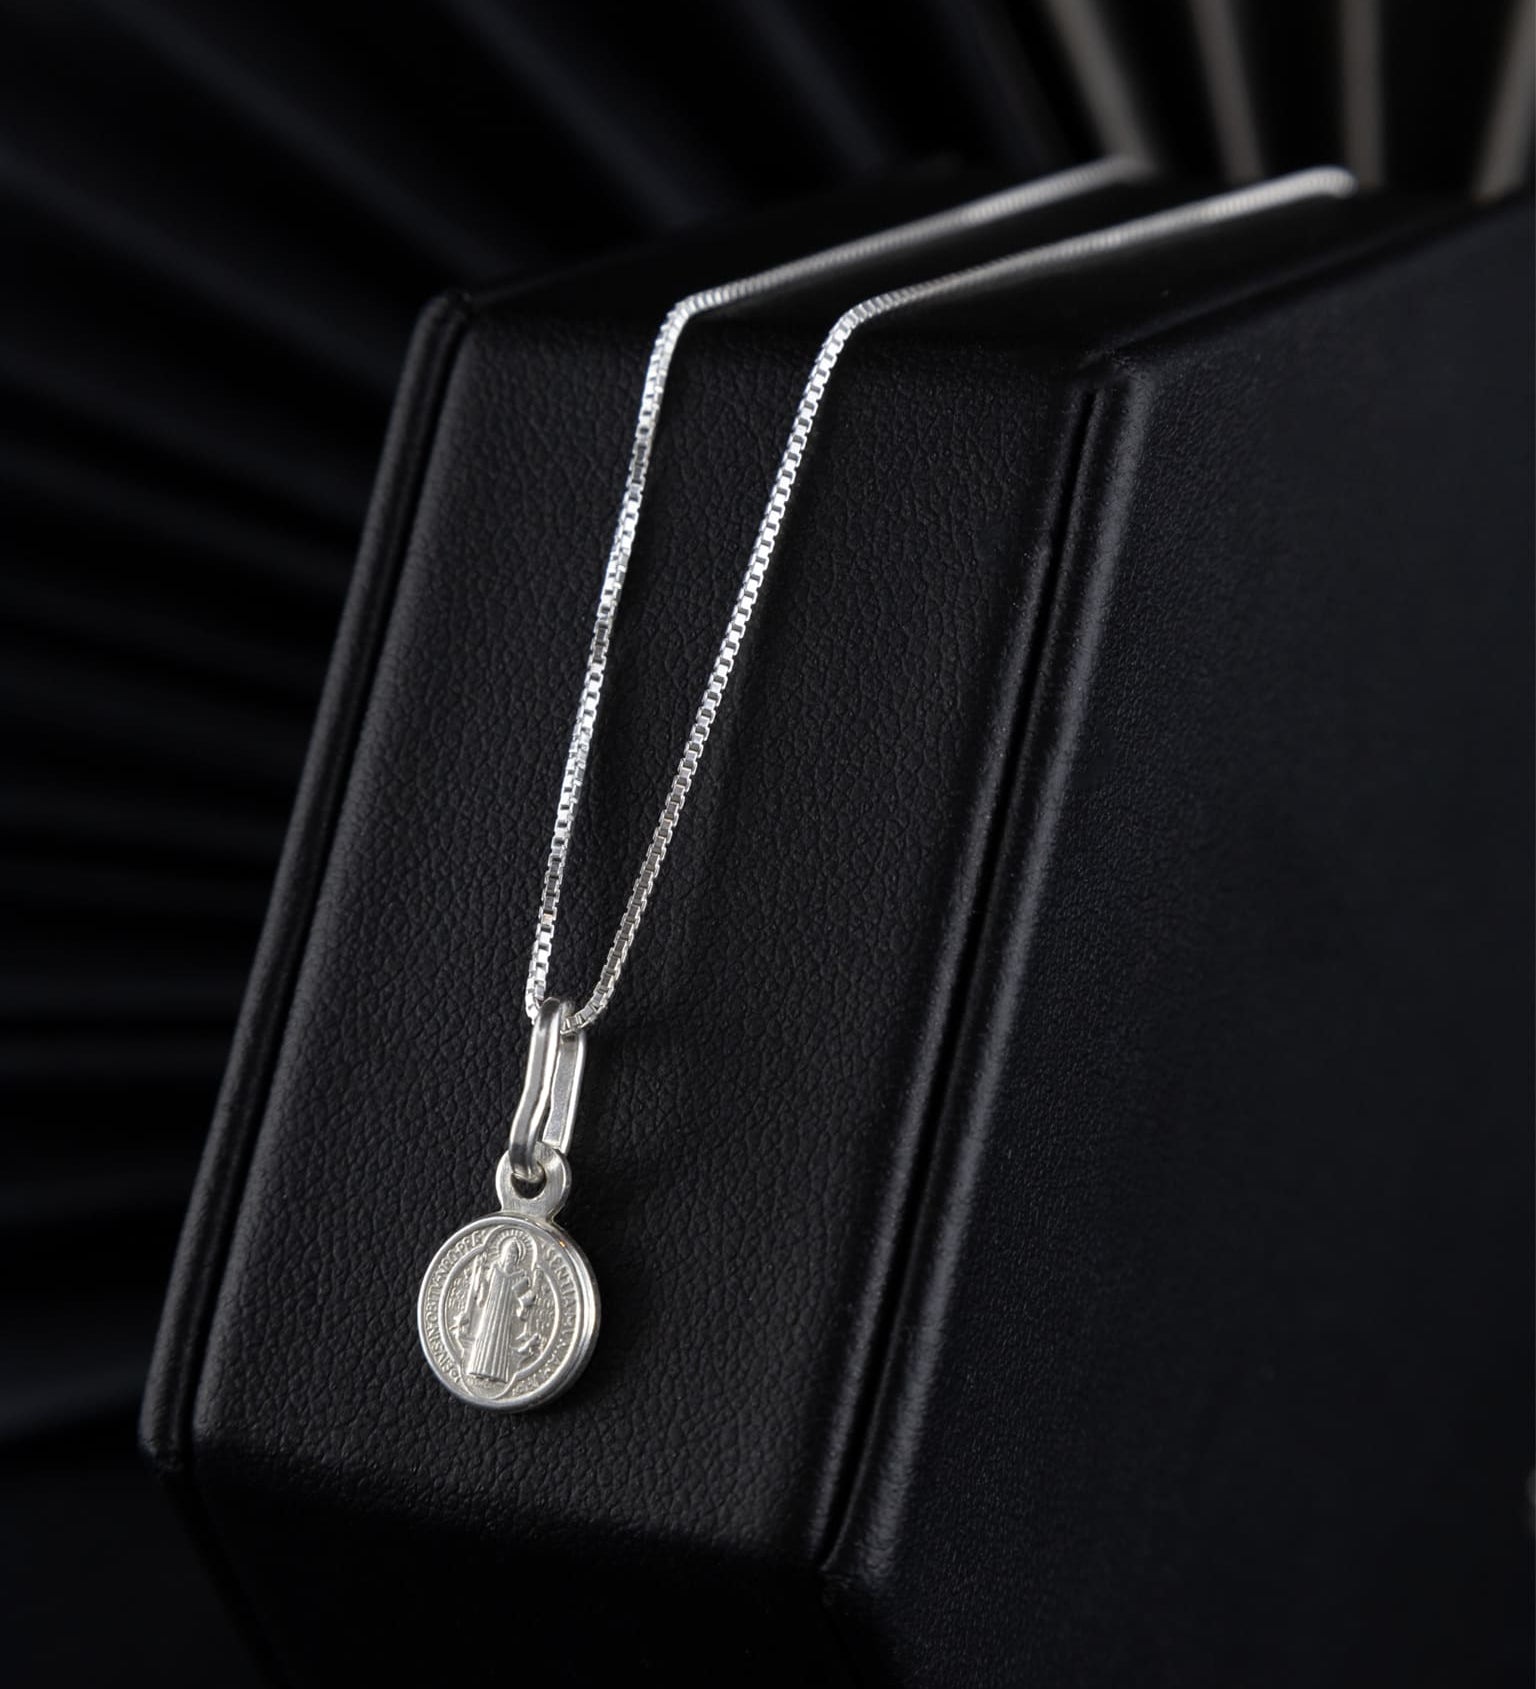 Venetian Chain in 925 Silver for Lady